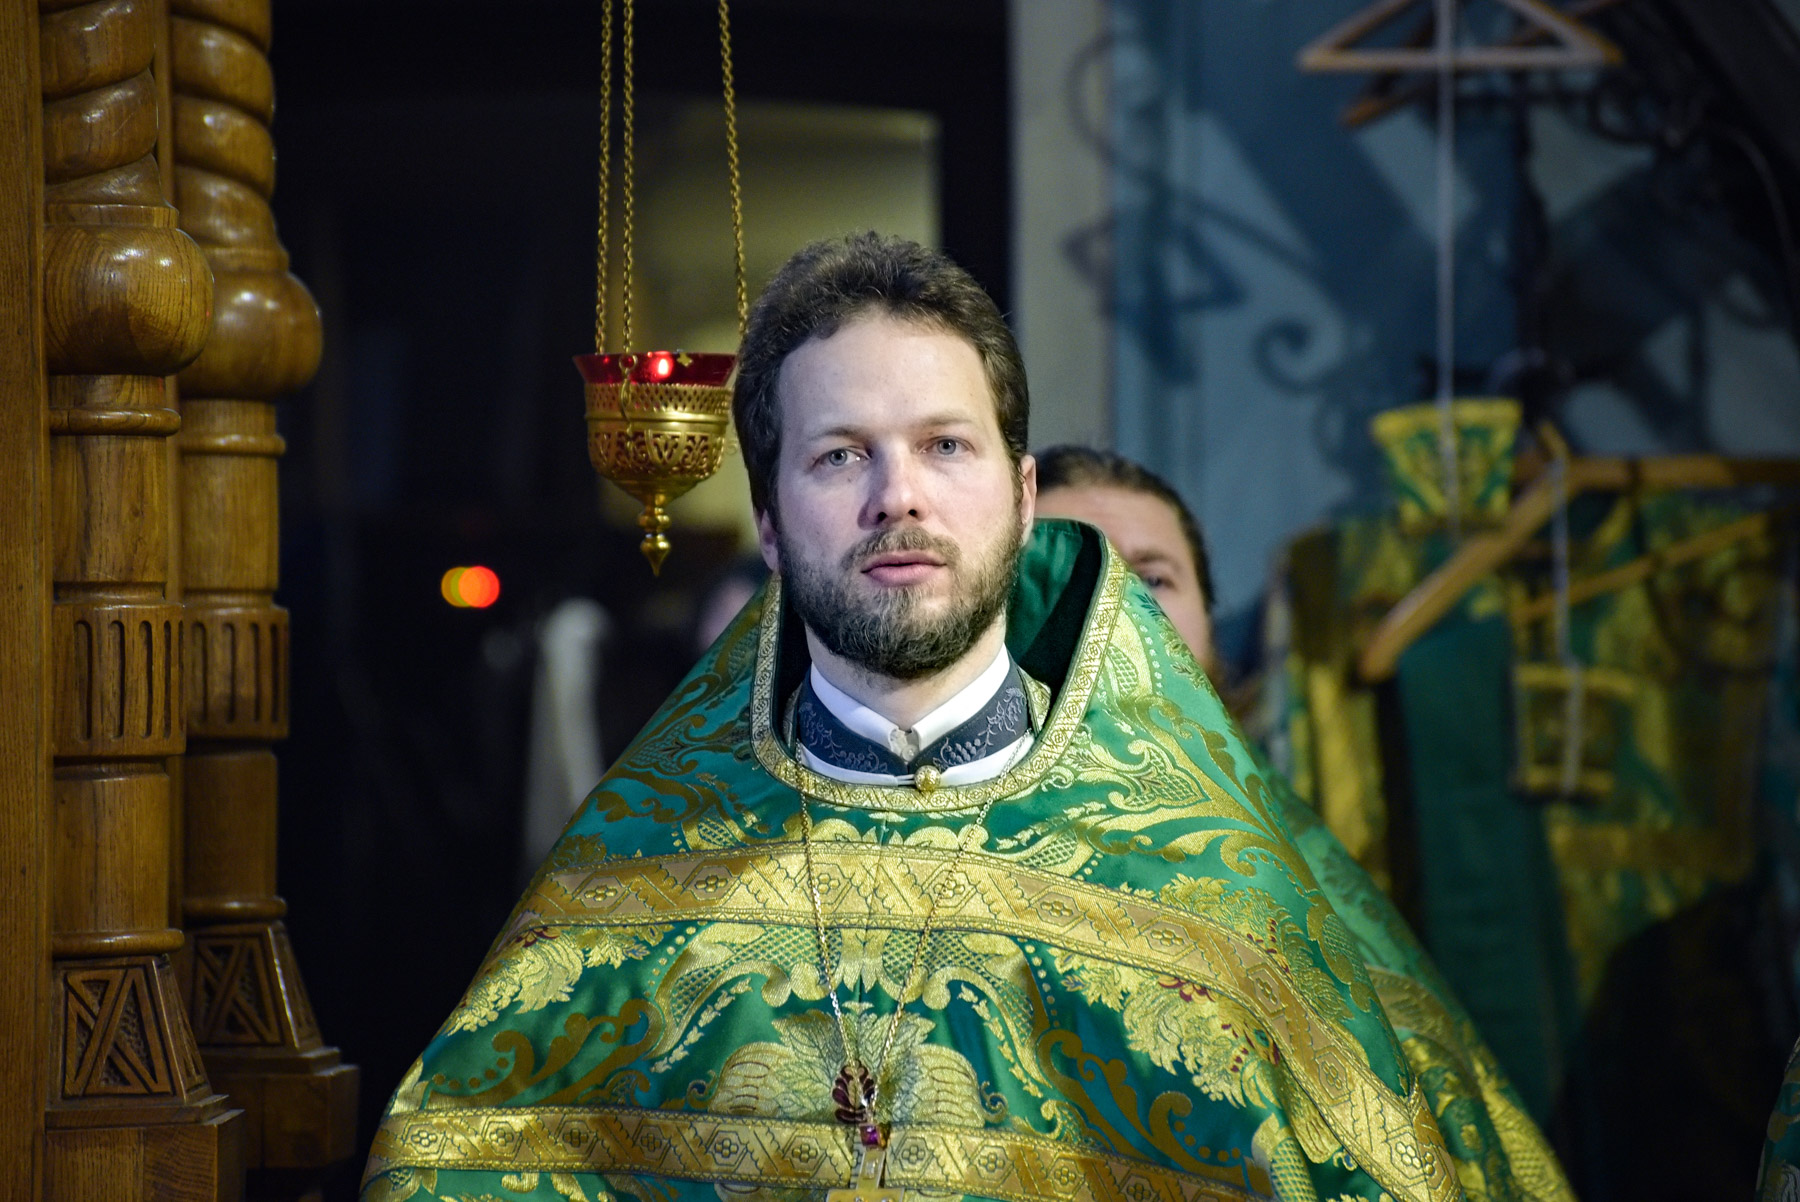 photos of orthodox christmas 0176 2